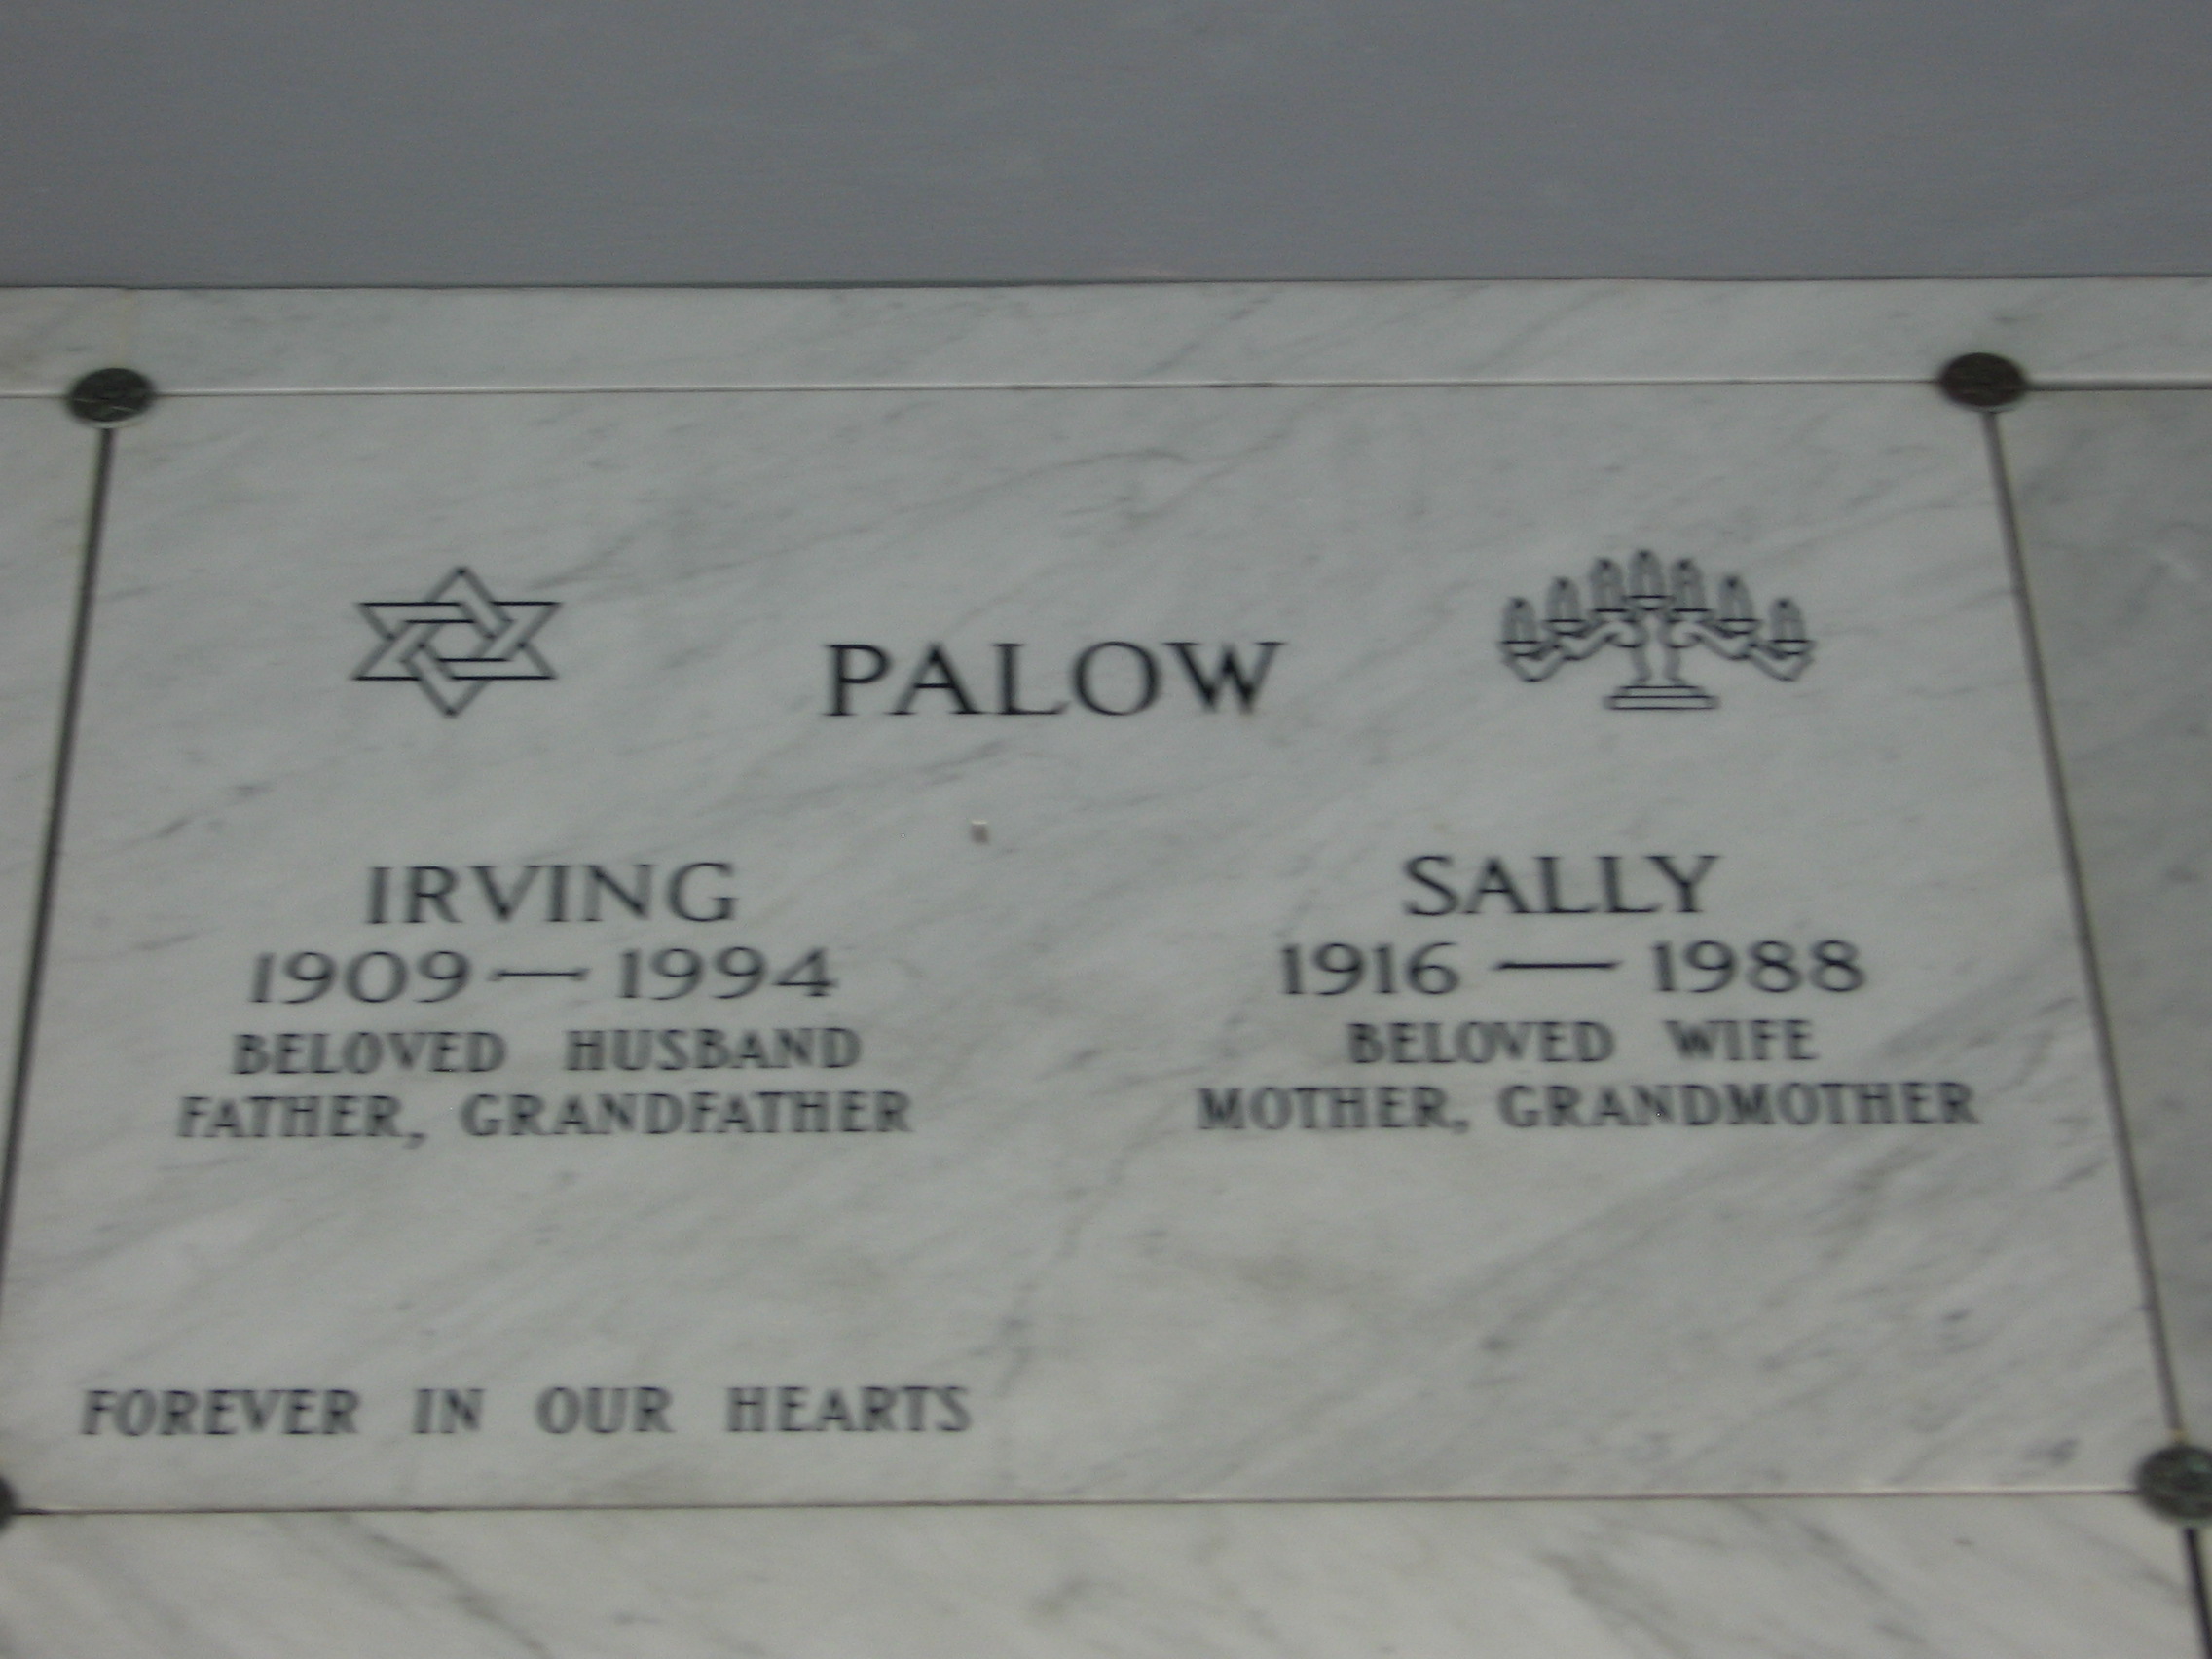 Irving Palow